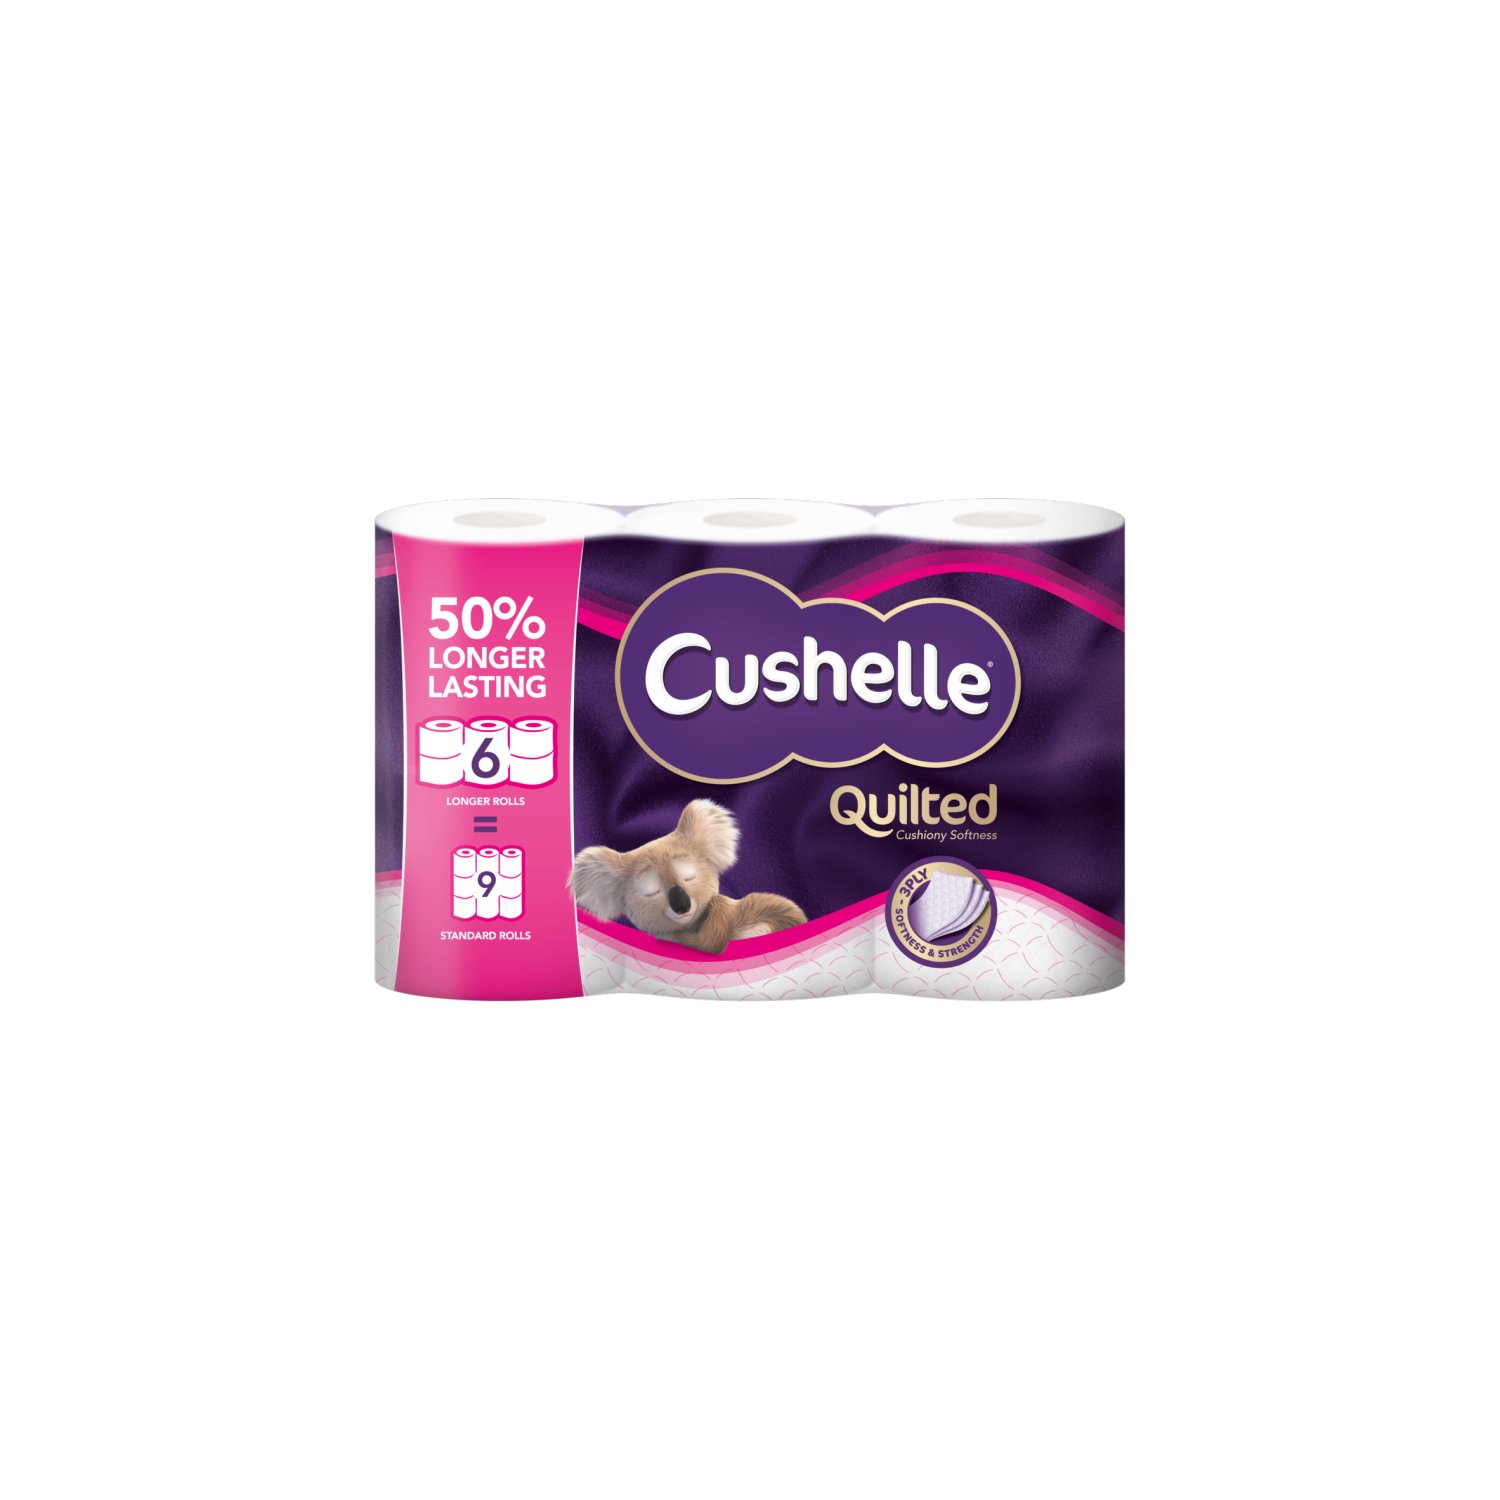 Cushelle Quilted 50% Longer Lasting Toilet Roll 6 Equals 9 Regular Rolls (6 Roll)